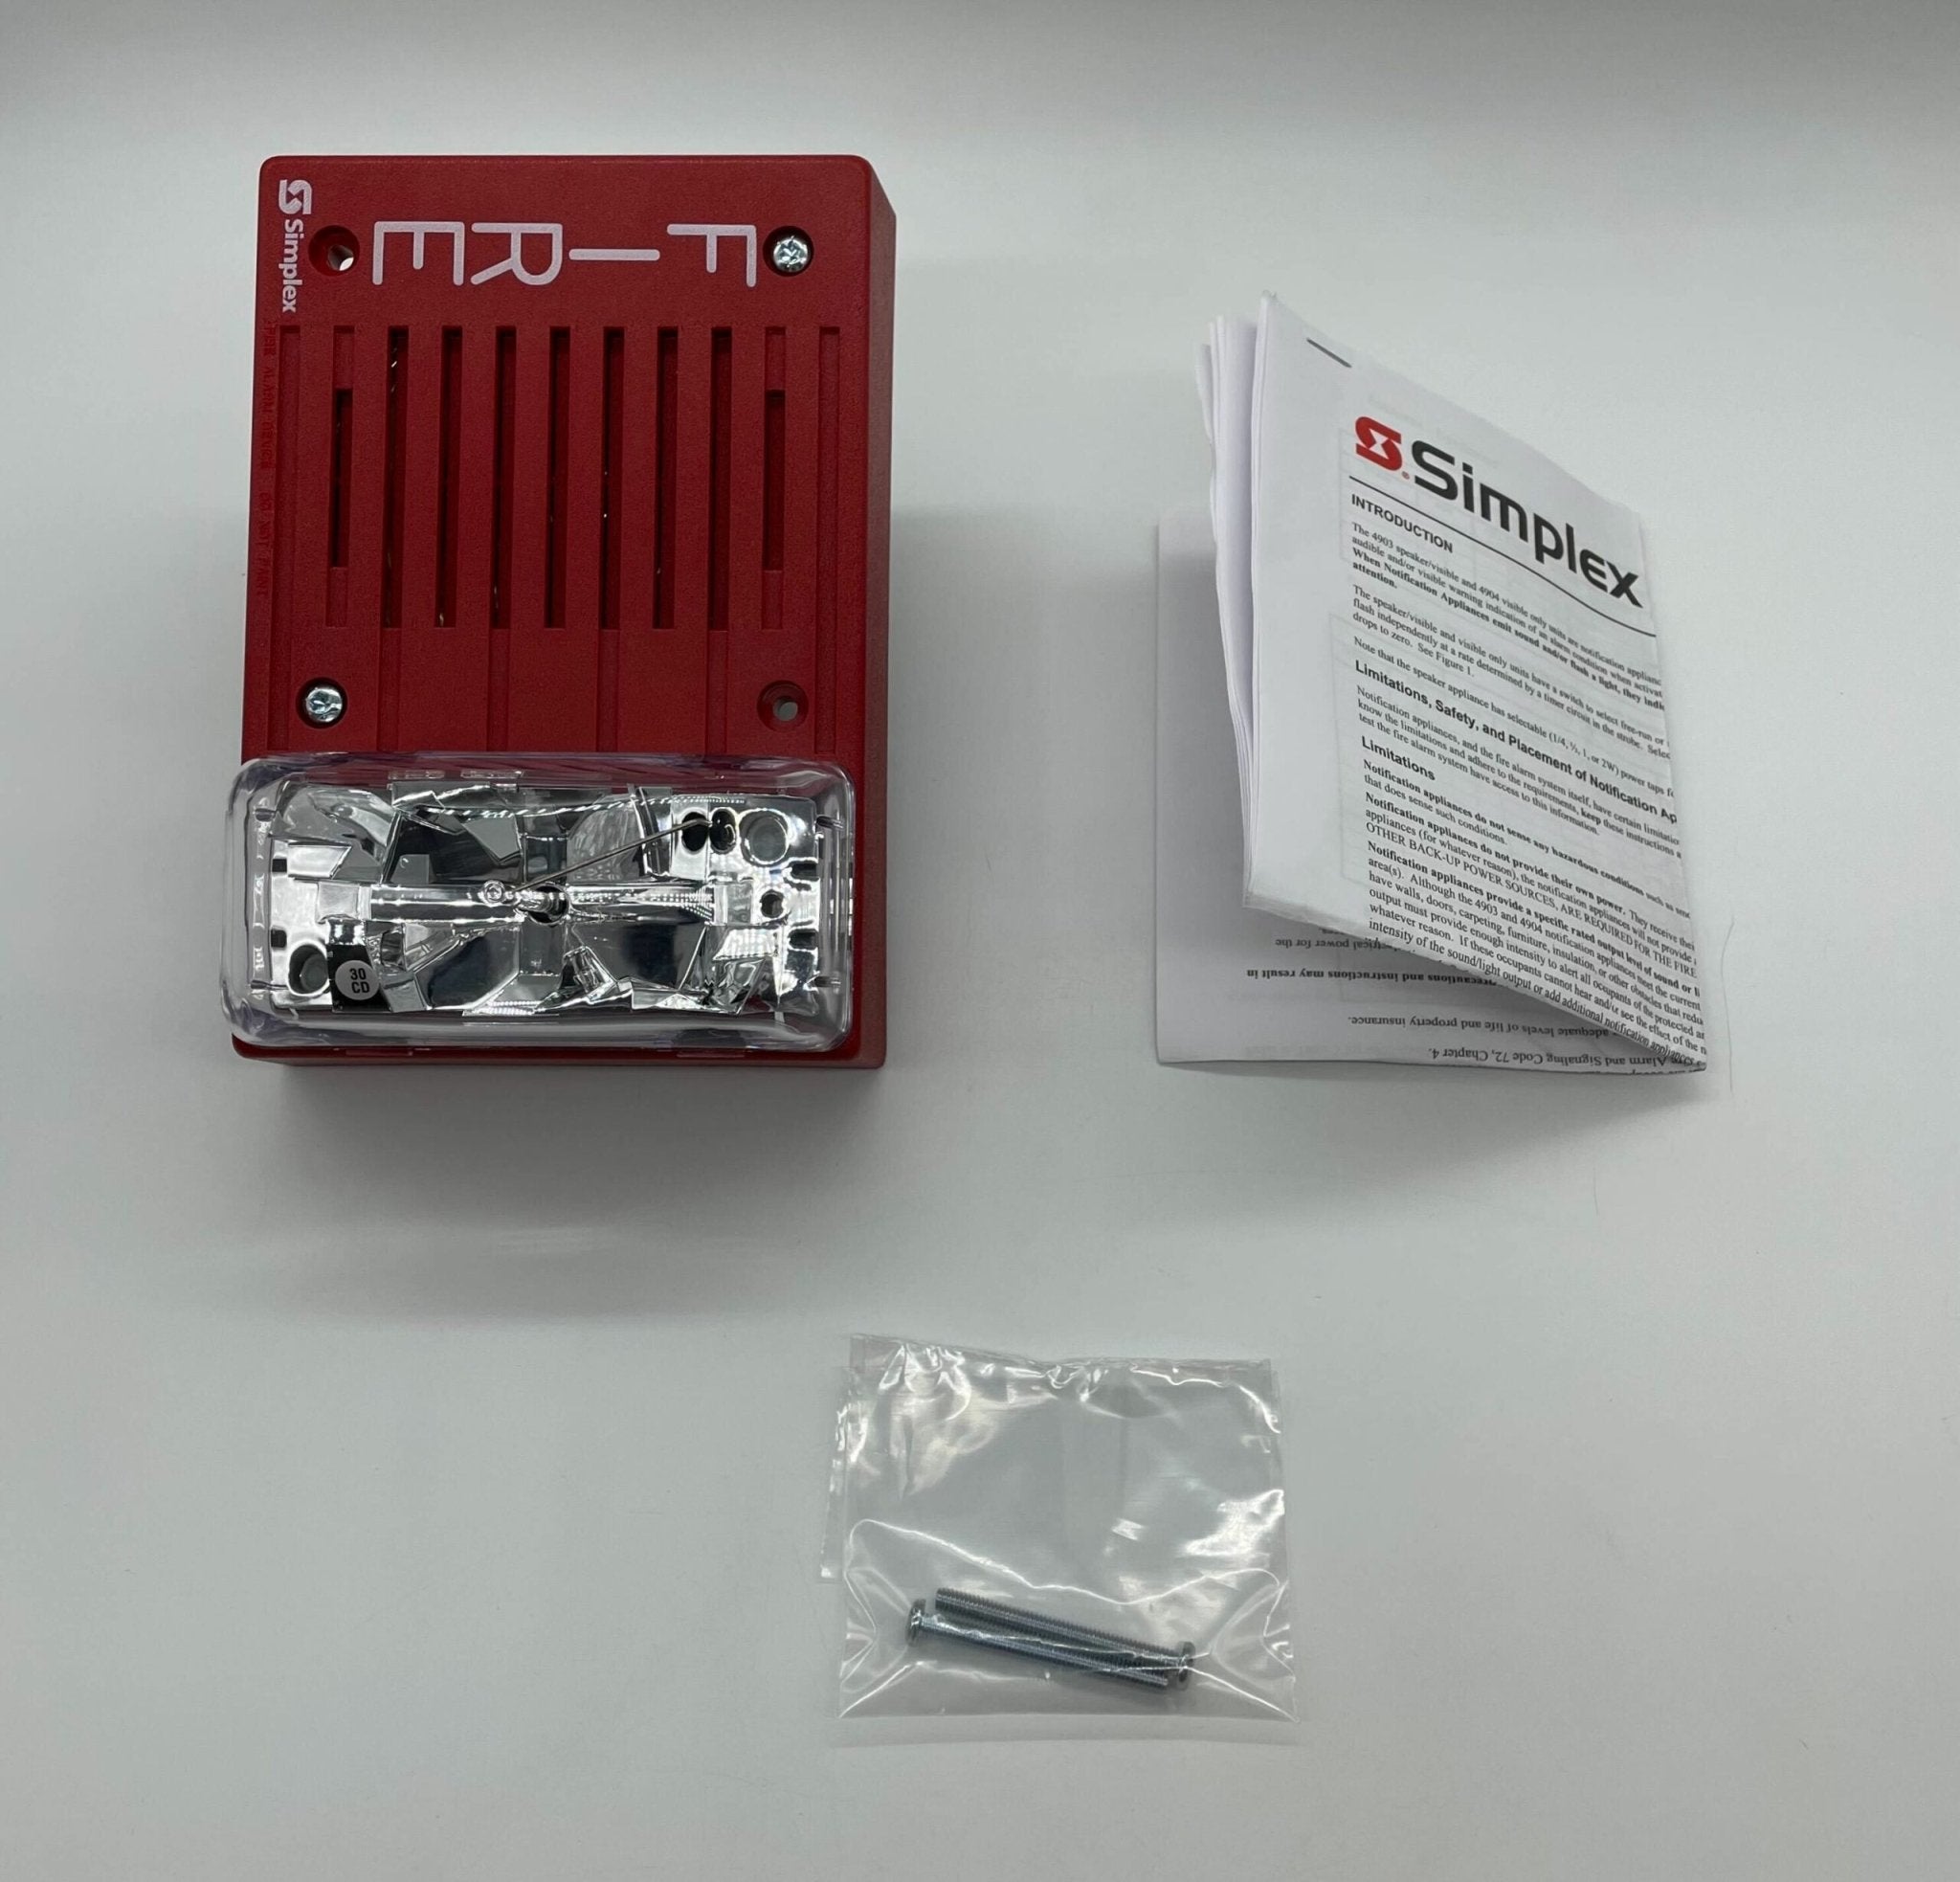 Simplex 4903-9148 S/V 24Vdc 30Cd Red Horiz F/S - The Fire Alarm Supplier